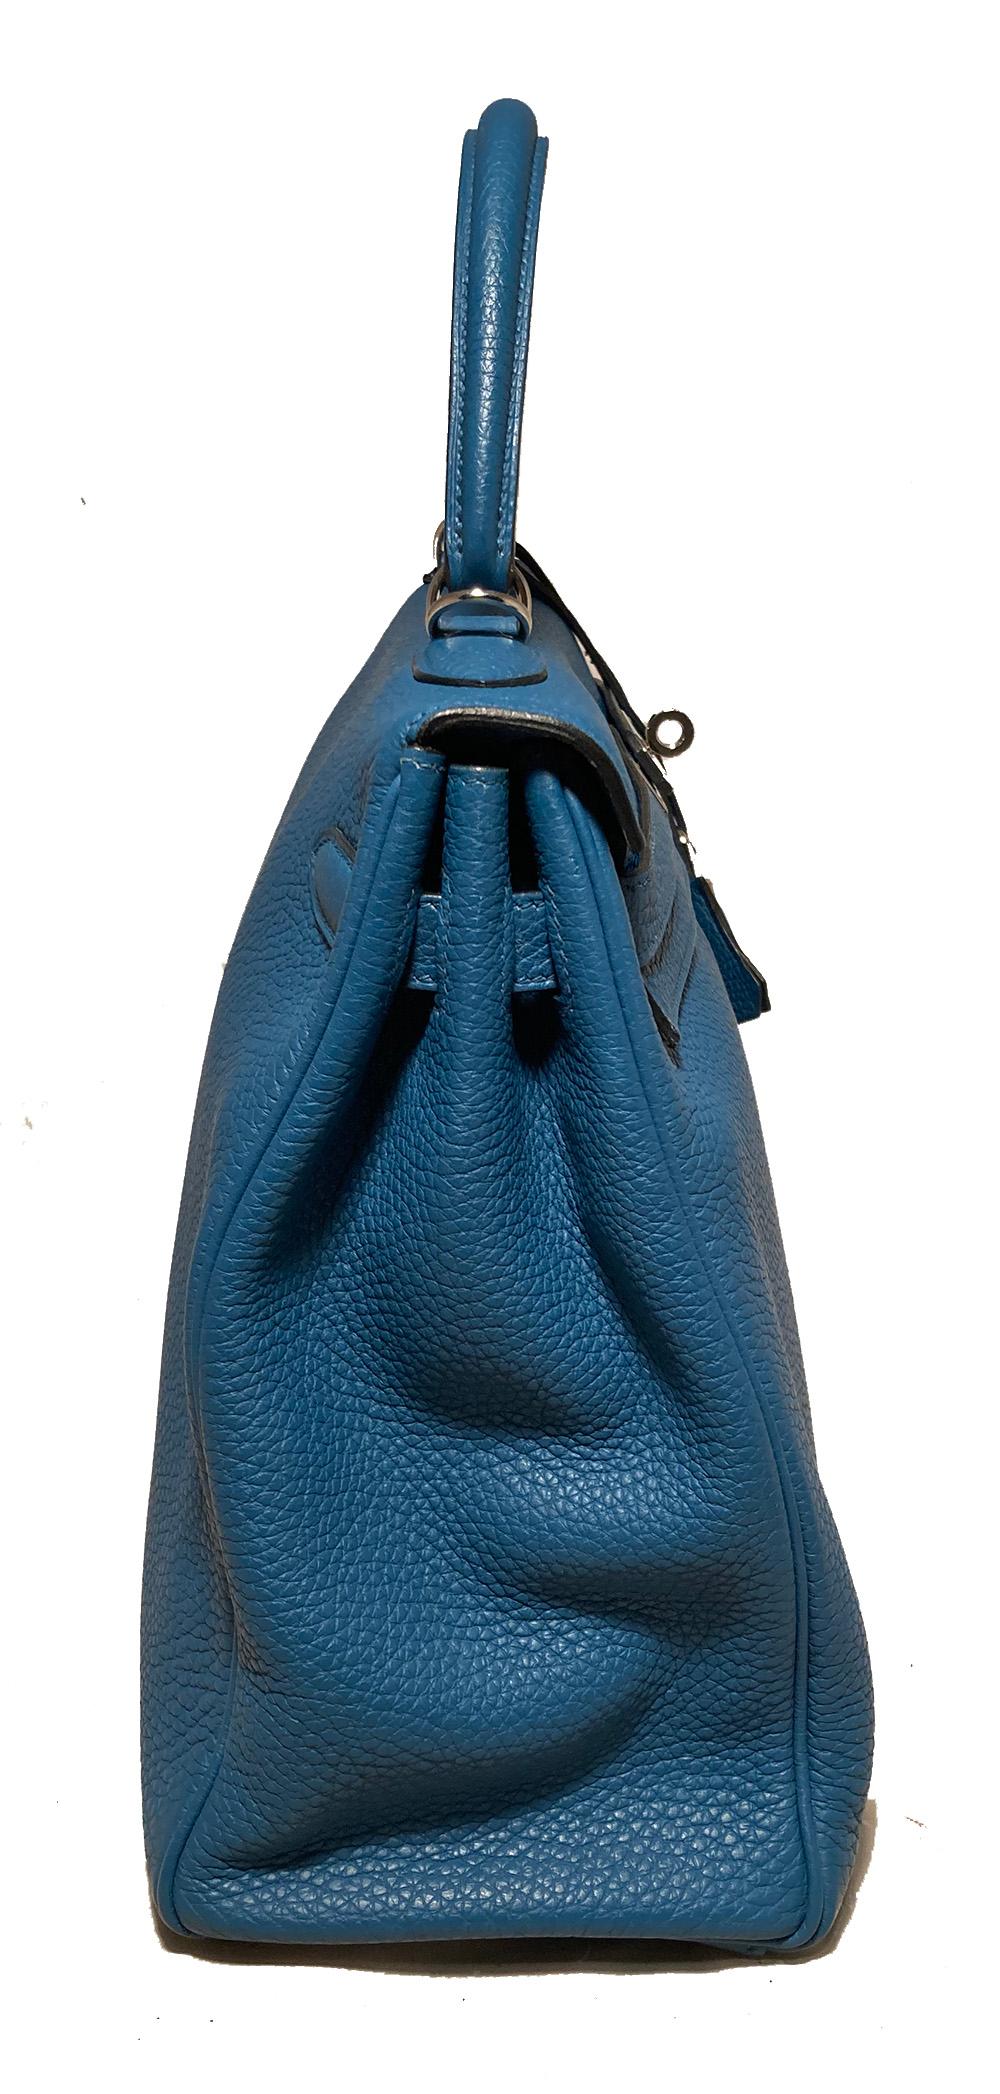  Hermès Togo Kelly Retourne 35 Bleu Cobalt PDH Pour femmes 